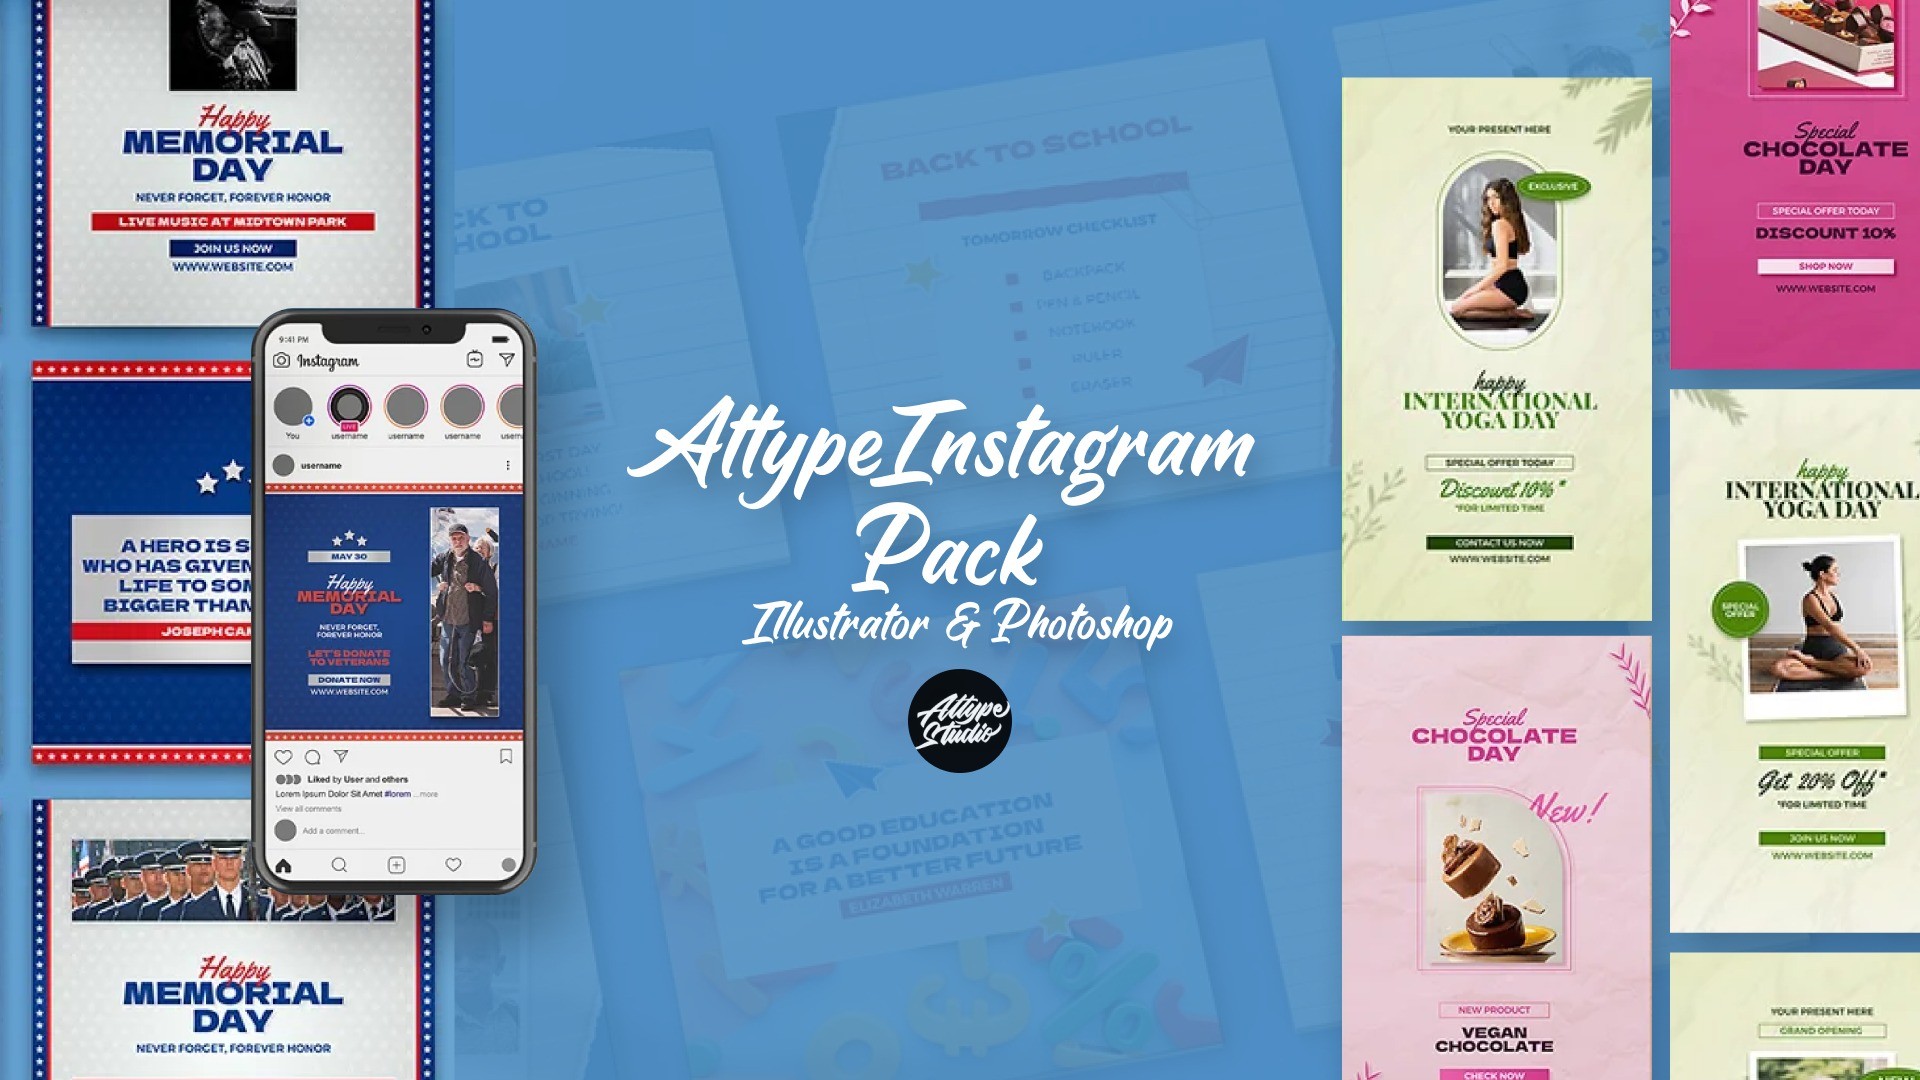 AppSumo Deal for Attype Instagram Pack - Illustrator & Photoshop